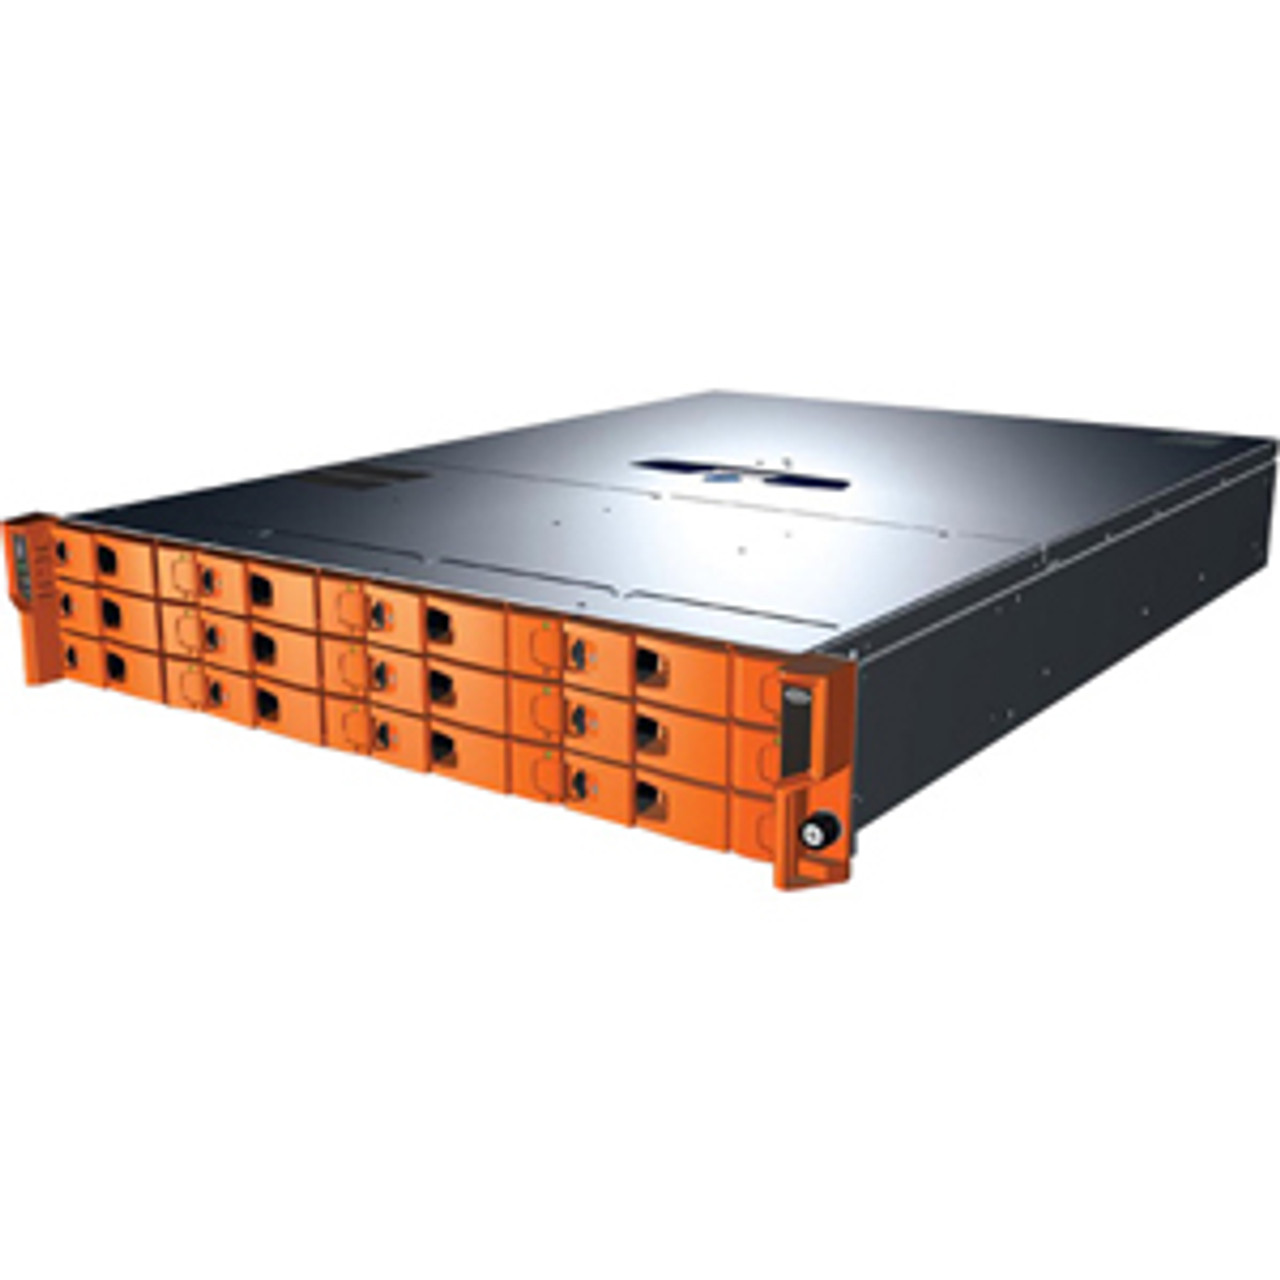 131022 - LaCie 12big Rack Network Storage Server - Intel Xeon E5410 2.33 GHz - 24 TB - USB USB DB-9 Serial VGA RJ-45 Network